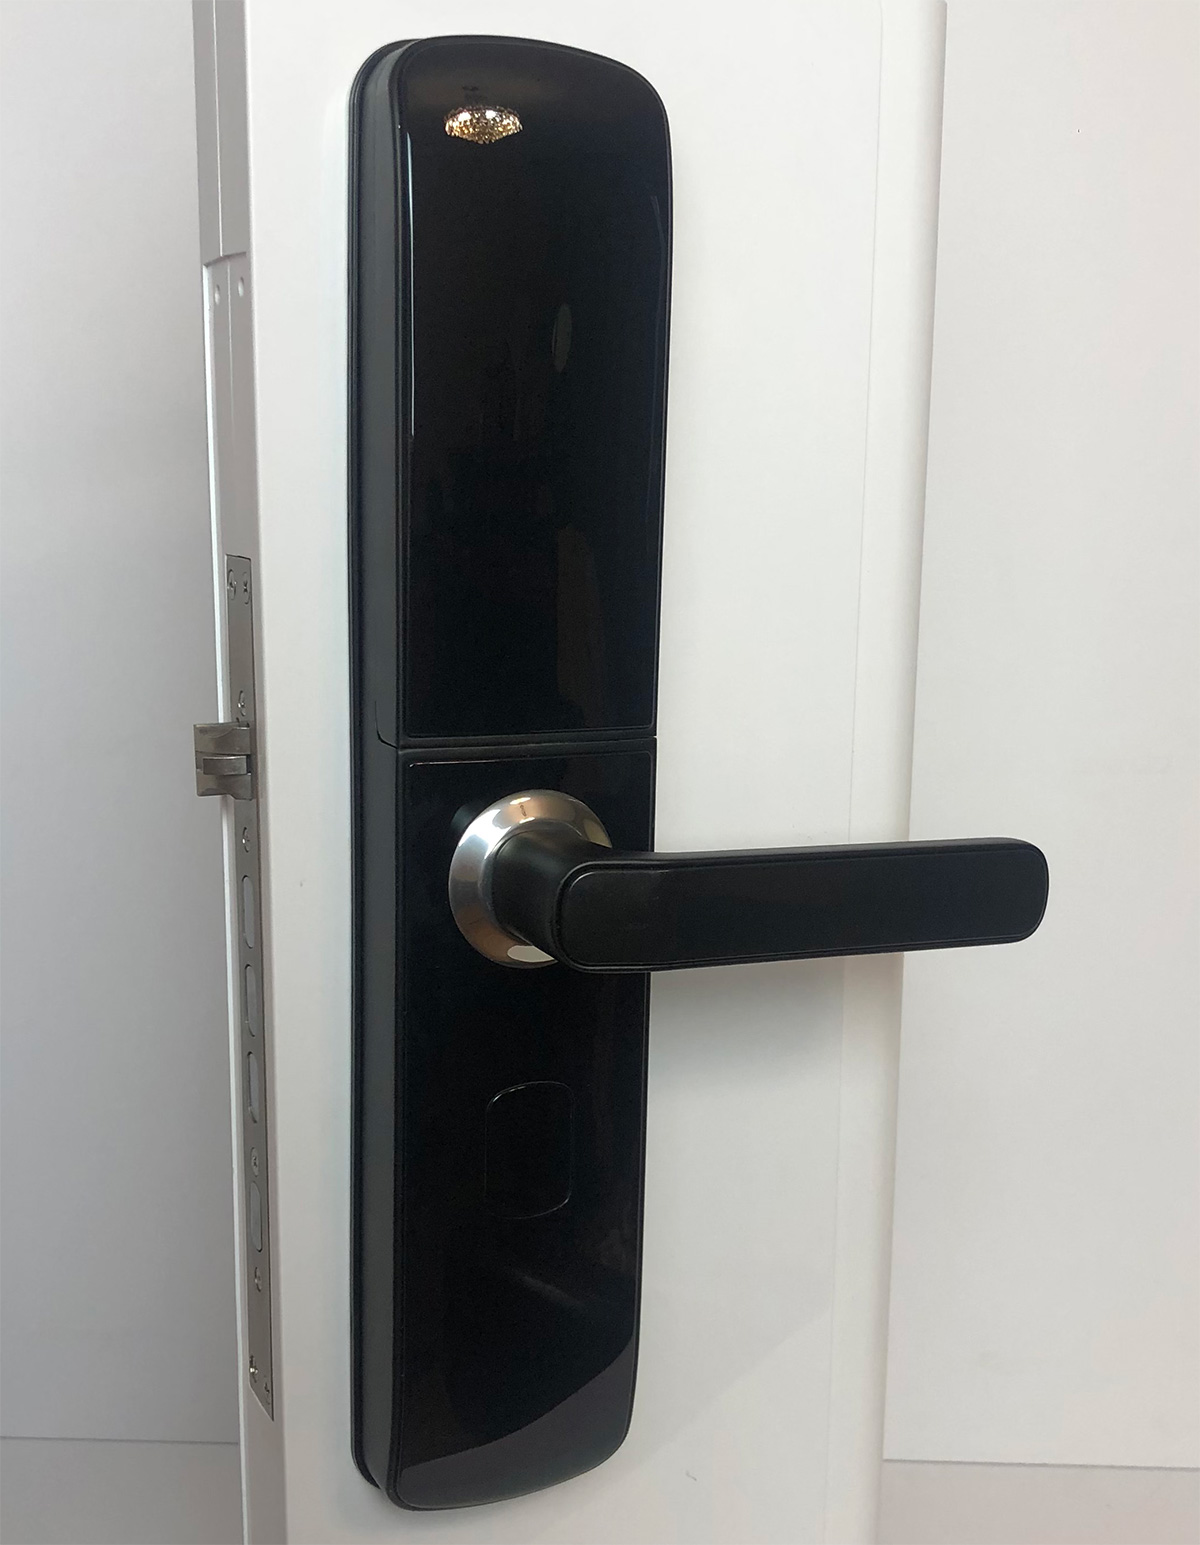 фото Mirlock электронный замок mirlock f723-k на входную дверь